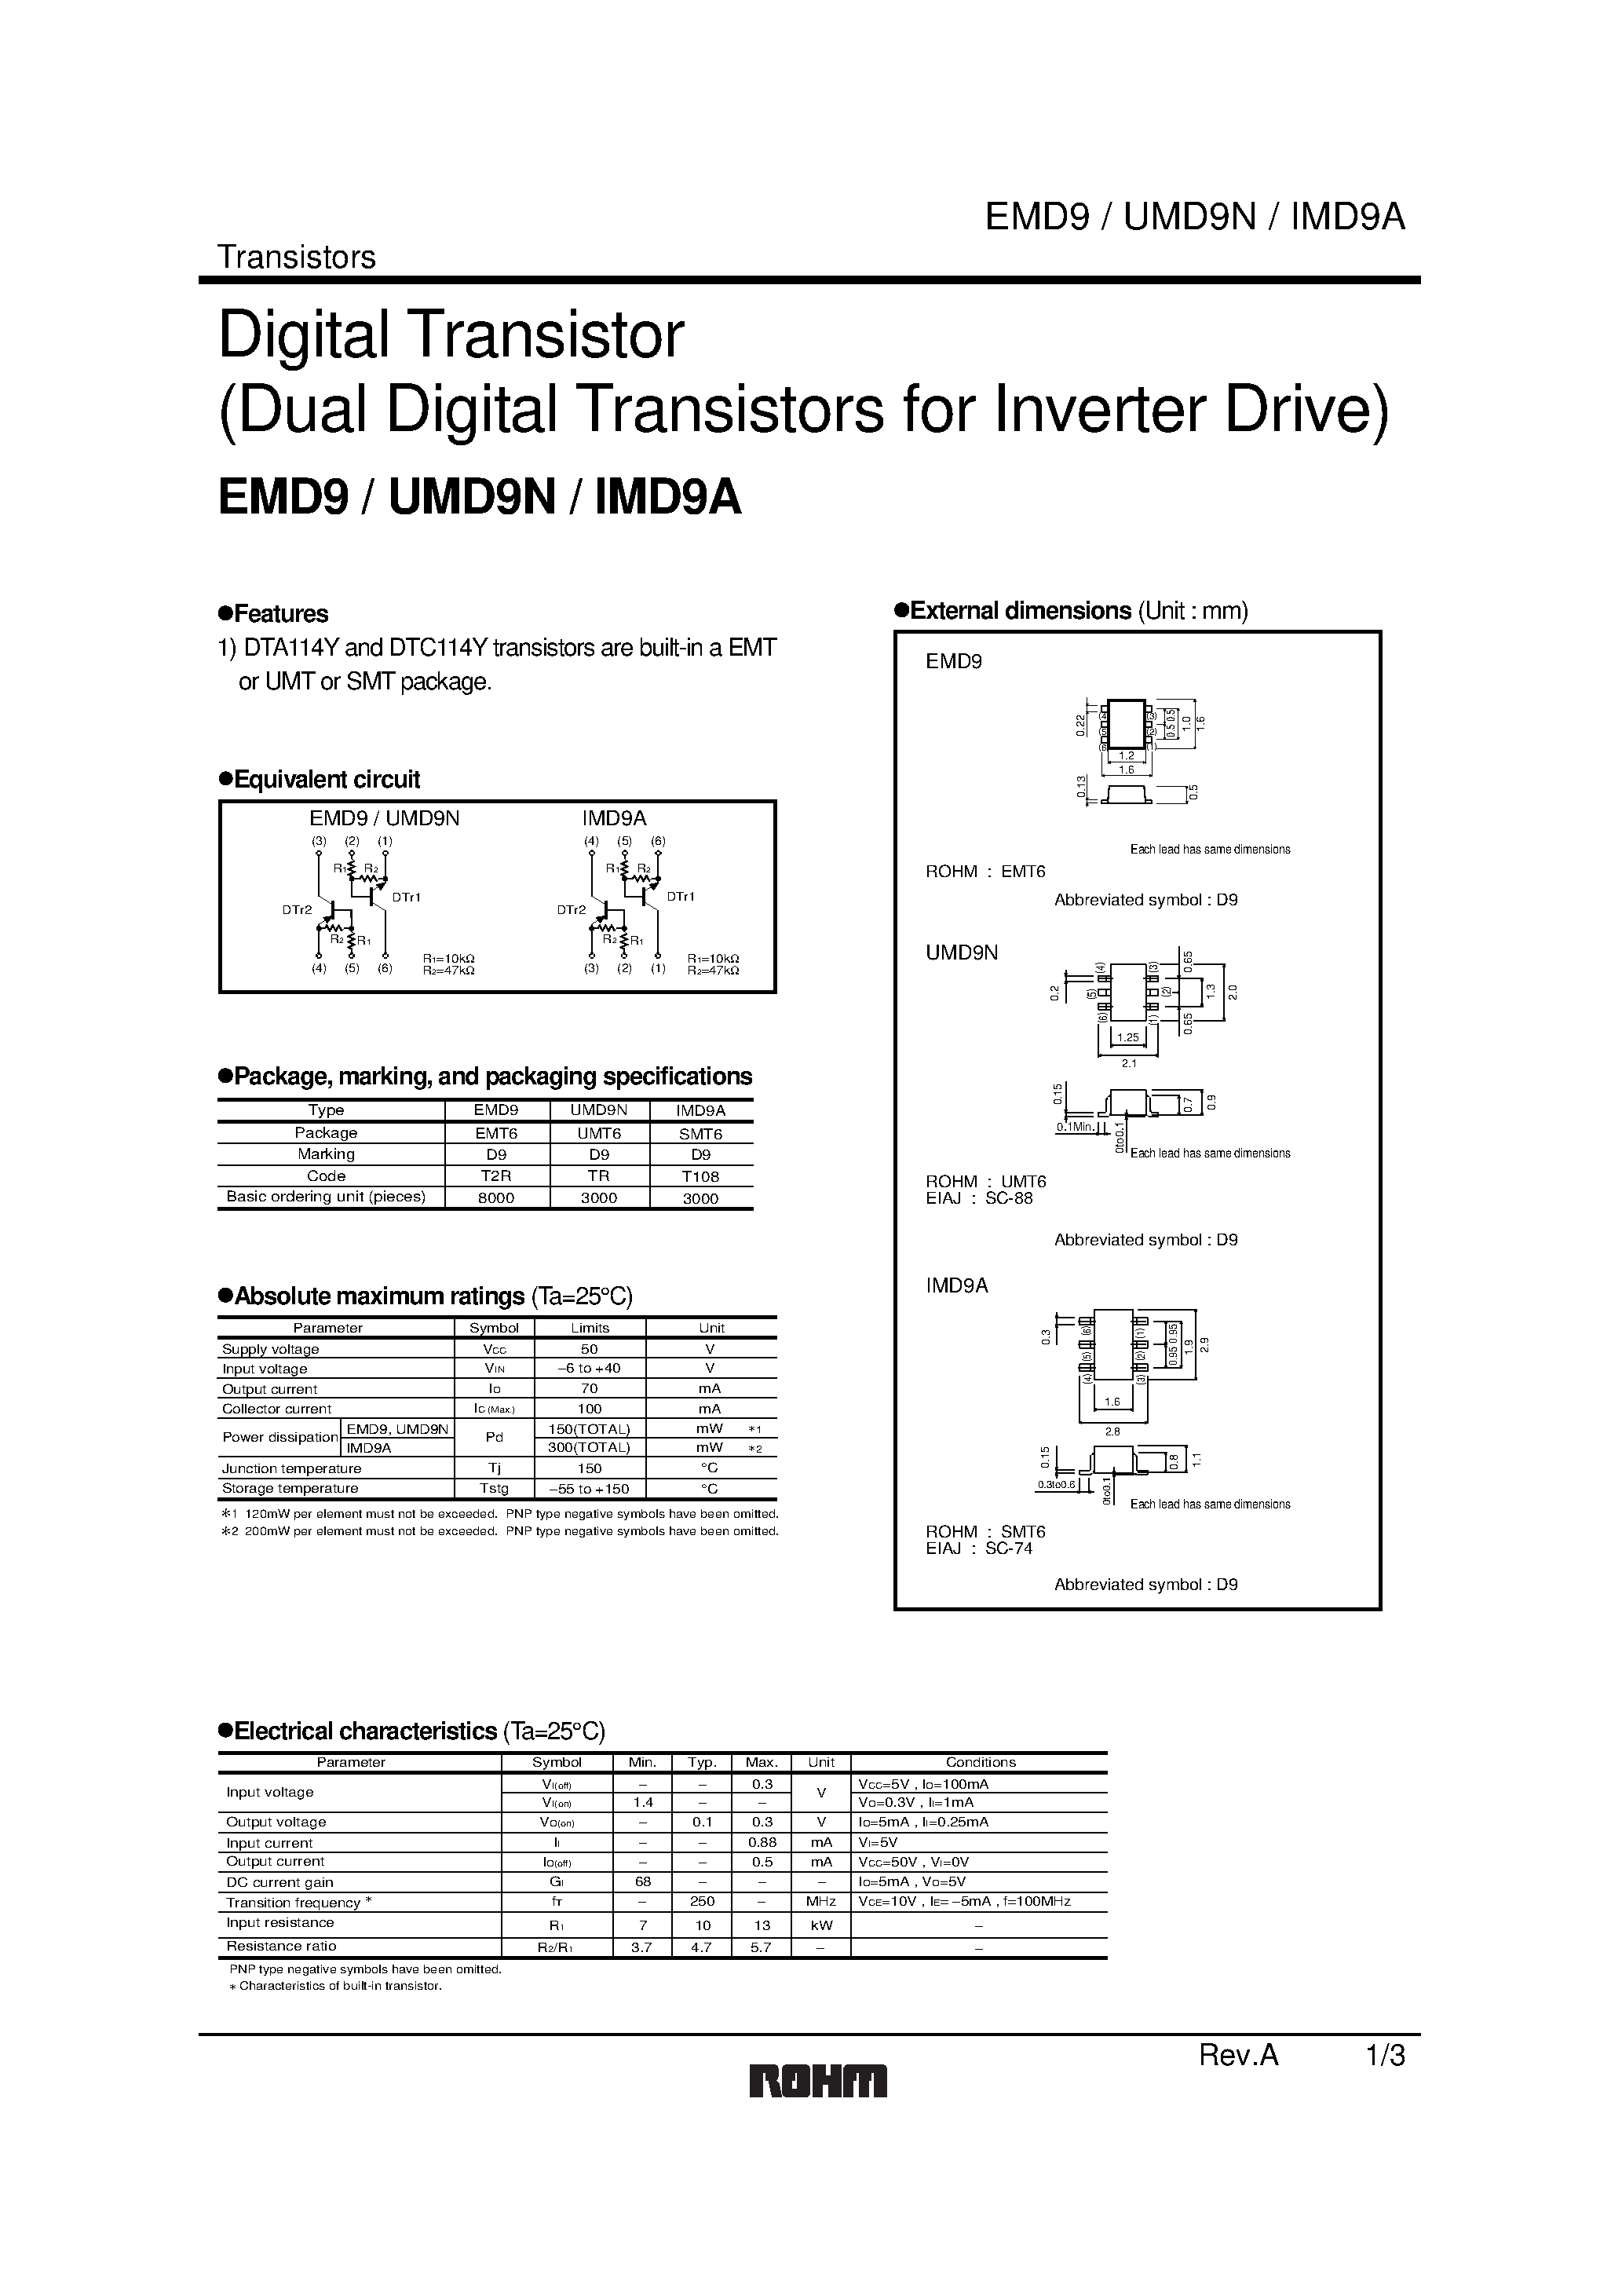 Даташит EMD9 - Digital Transistor (Dual Digital Transistors for Inverter Drive) страница 1